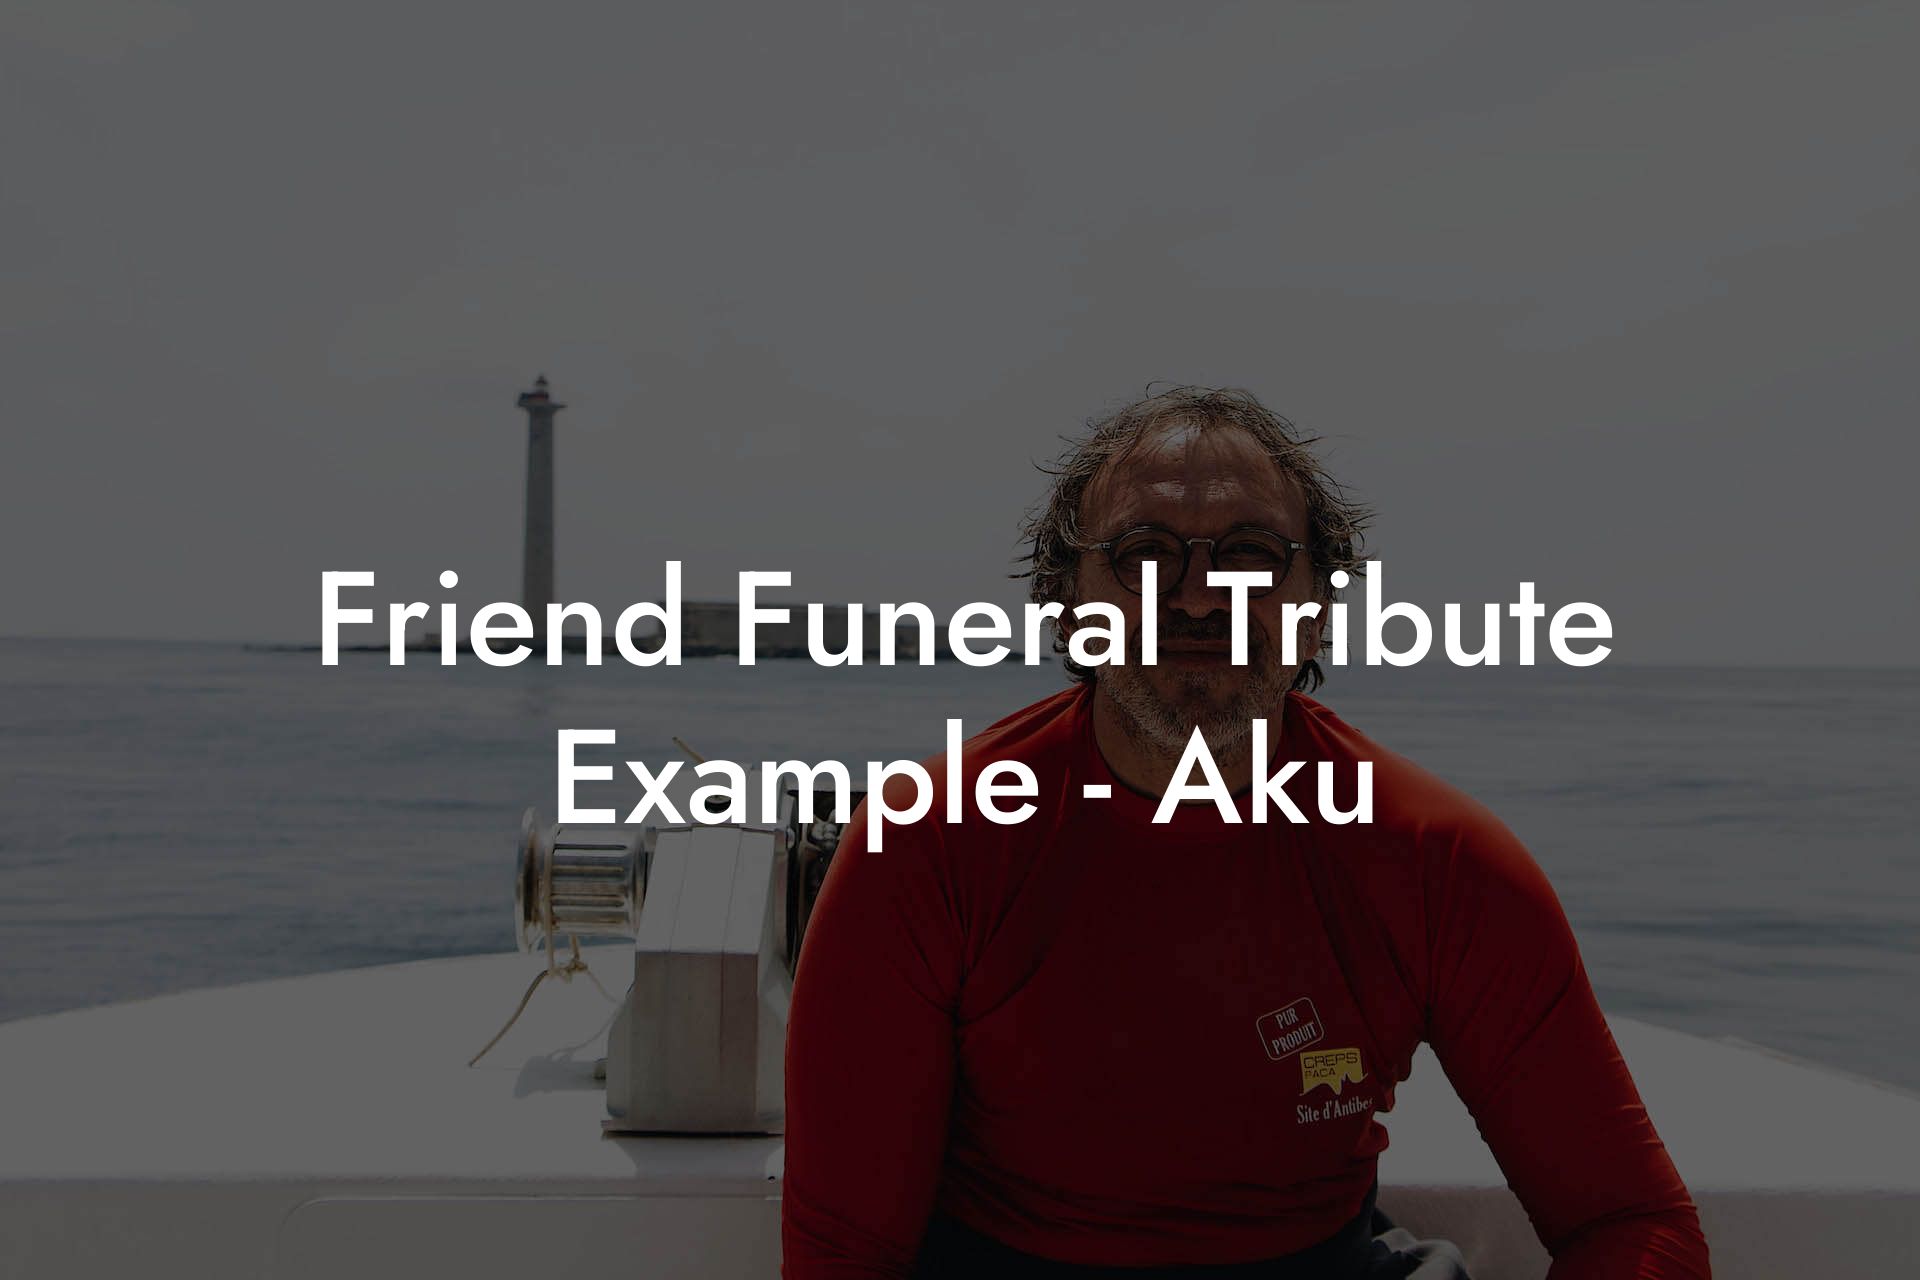 Friend Funeral Tribute Example - Aku